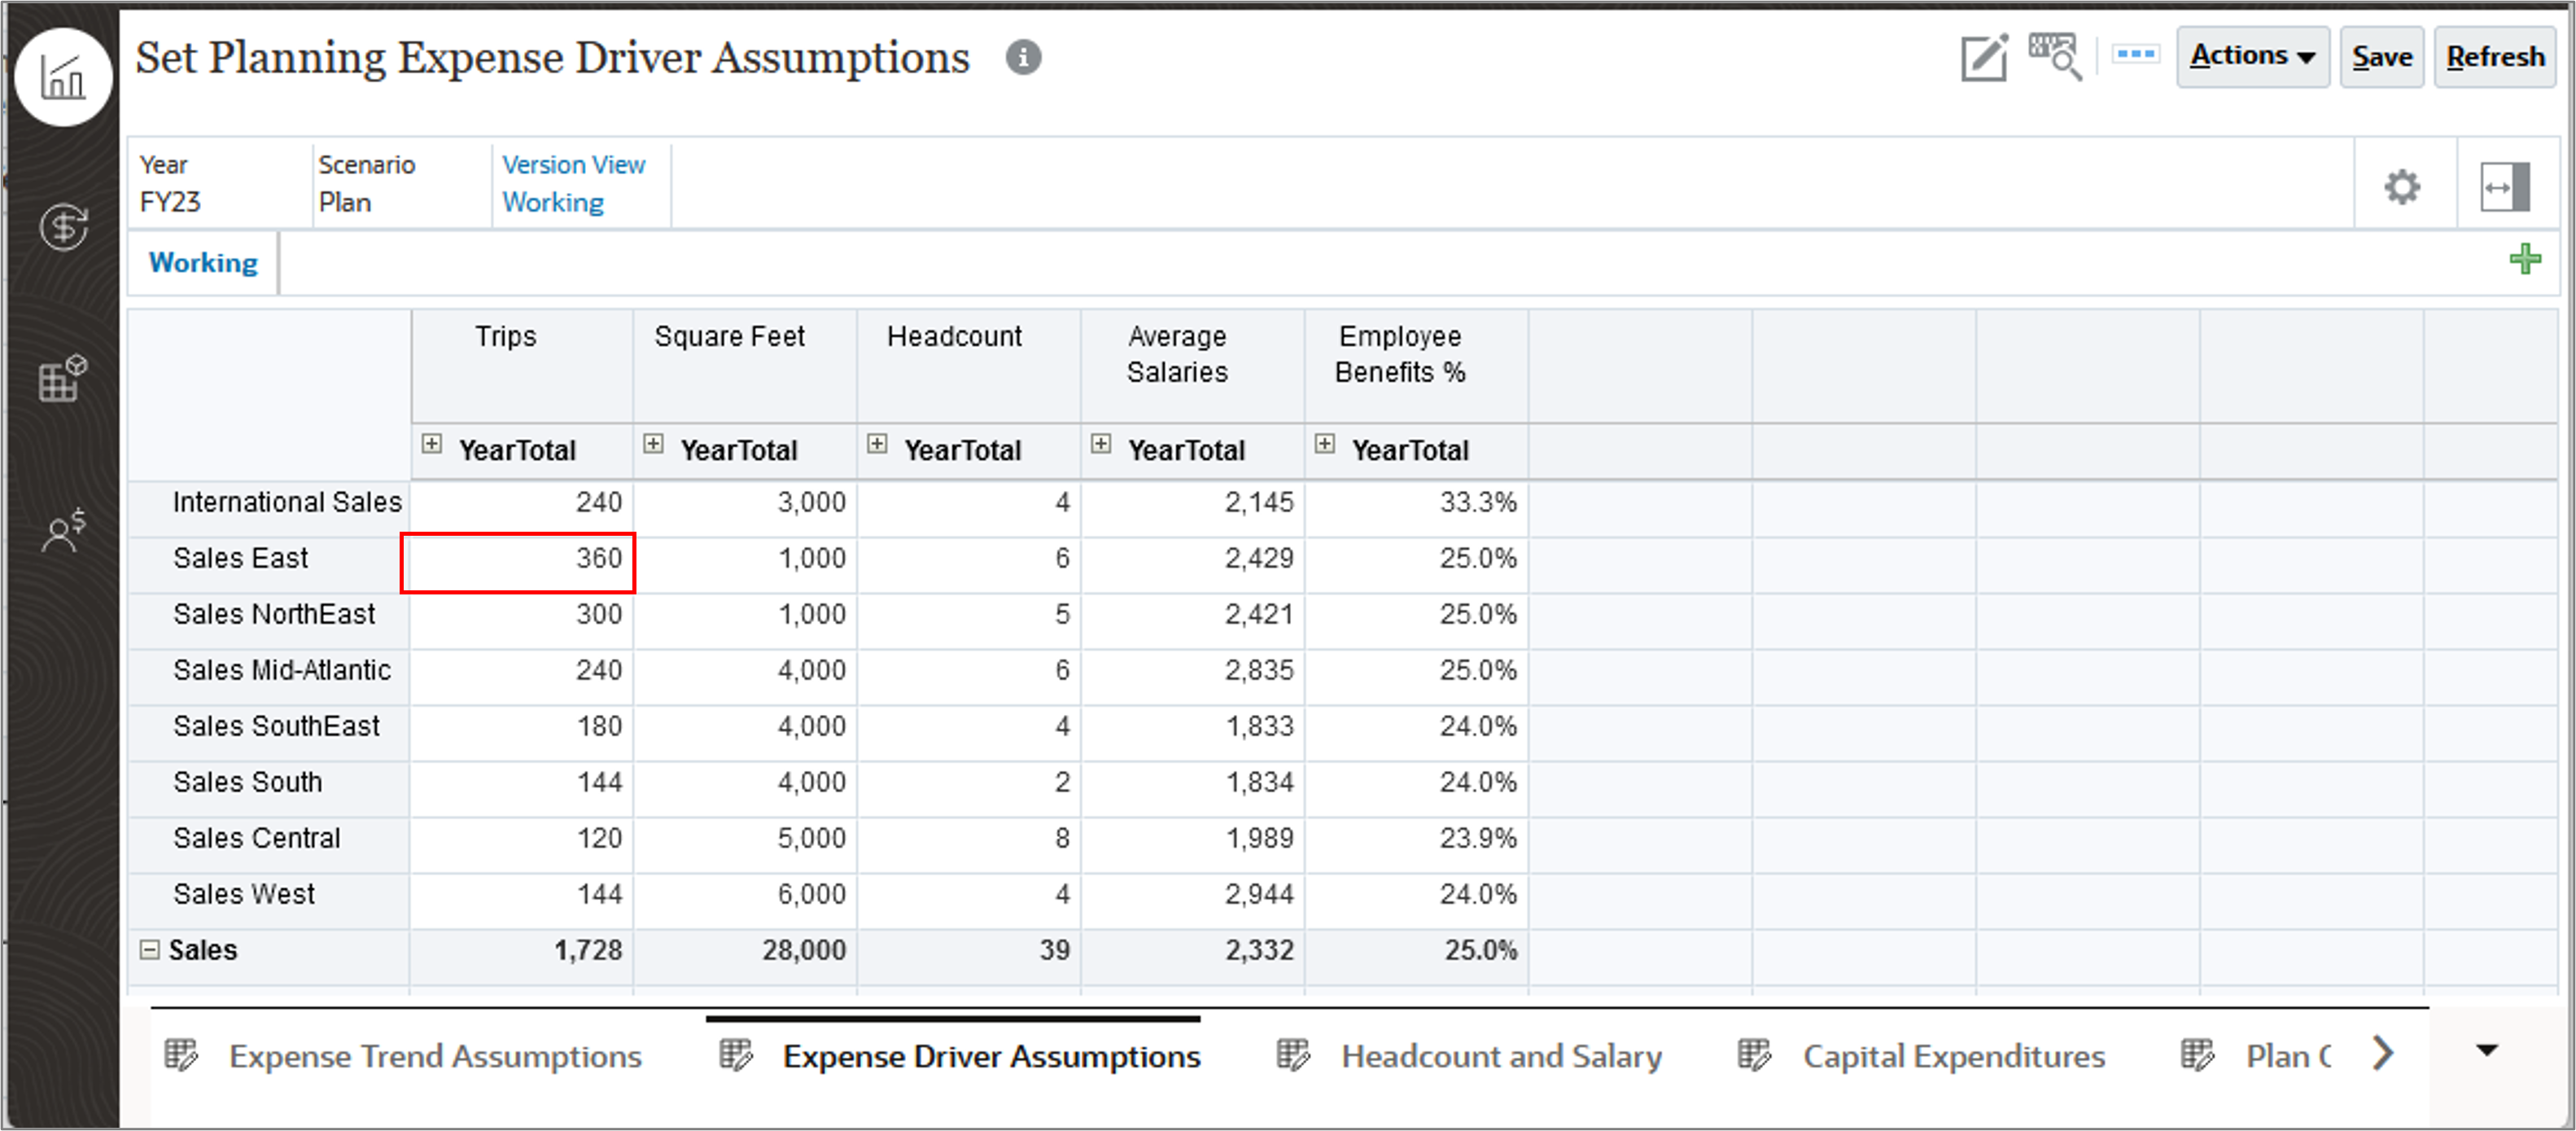 Set Planning Expense Driver Assumptions Form